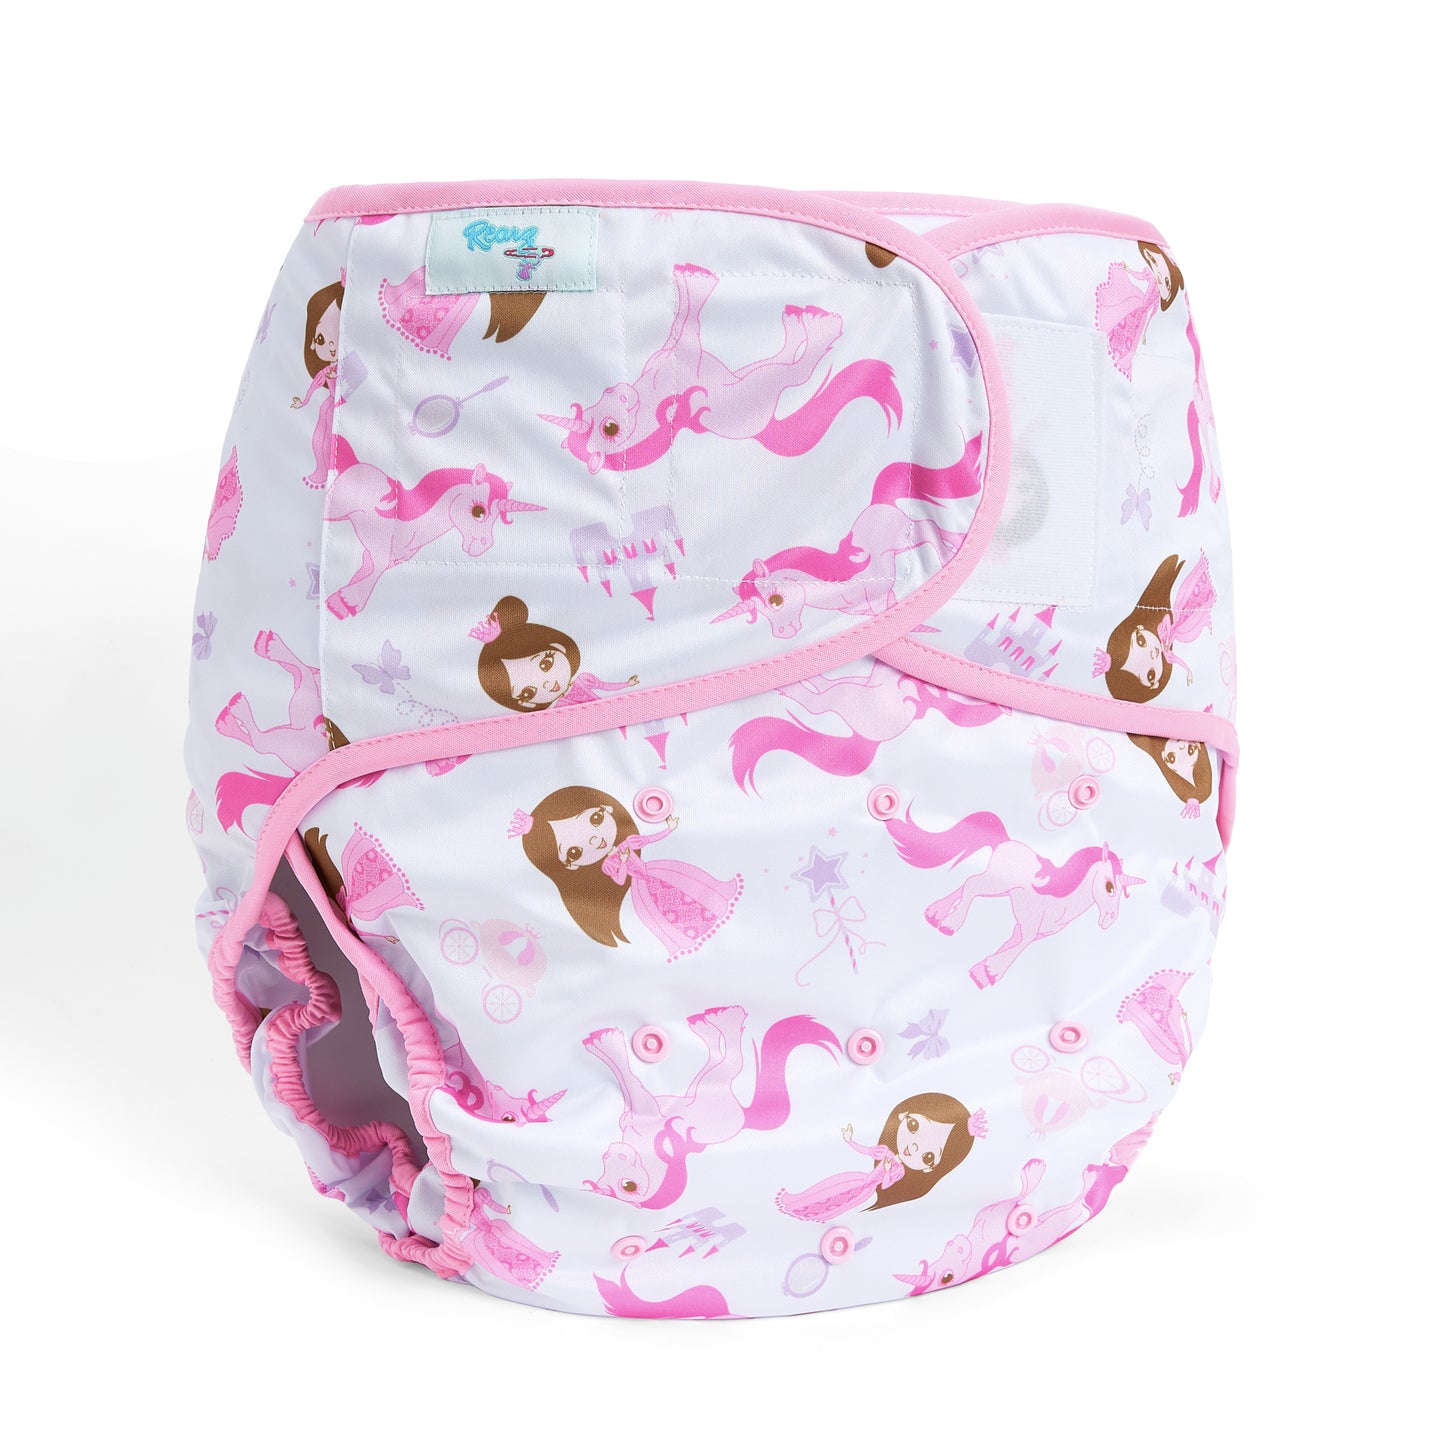 Rearz - Adult Diaper Cover/Wrap - Princess Pink